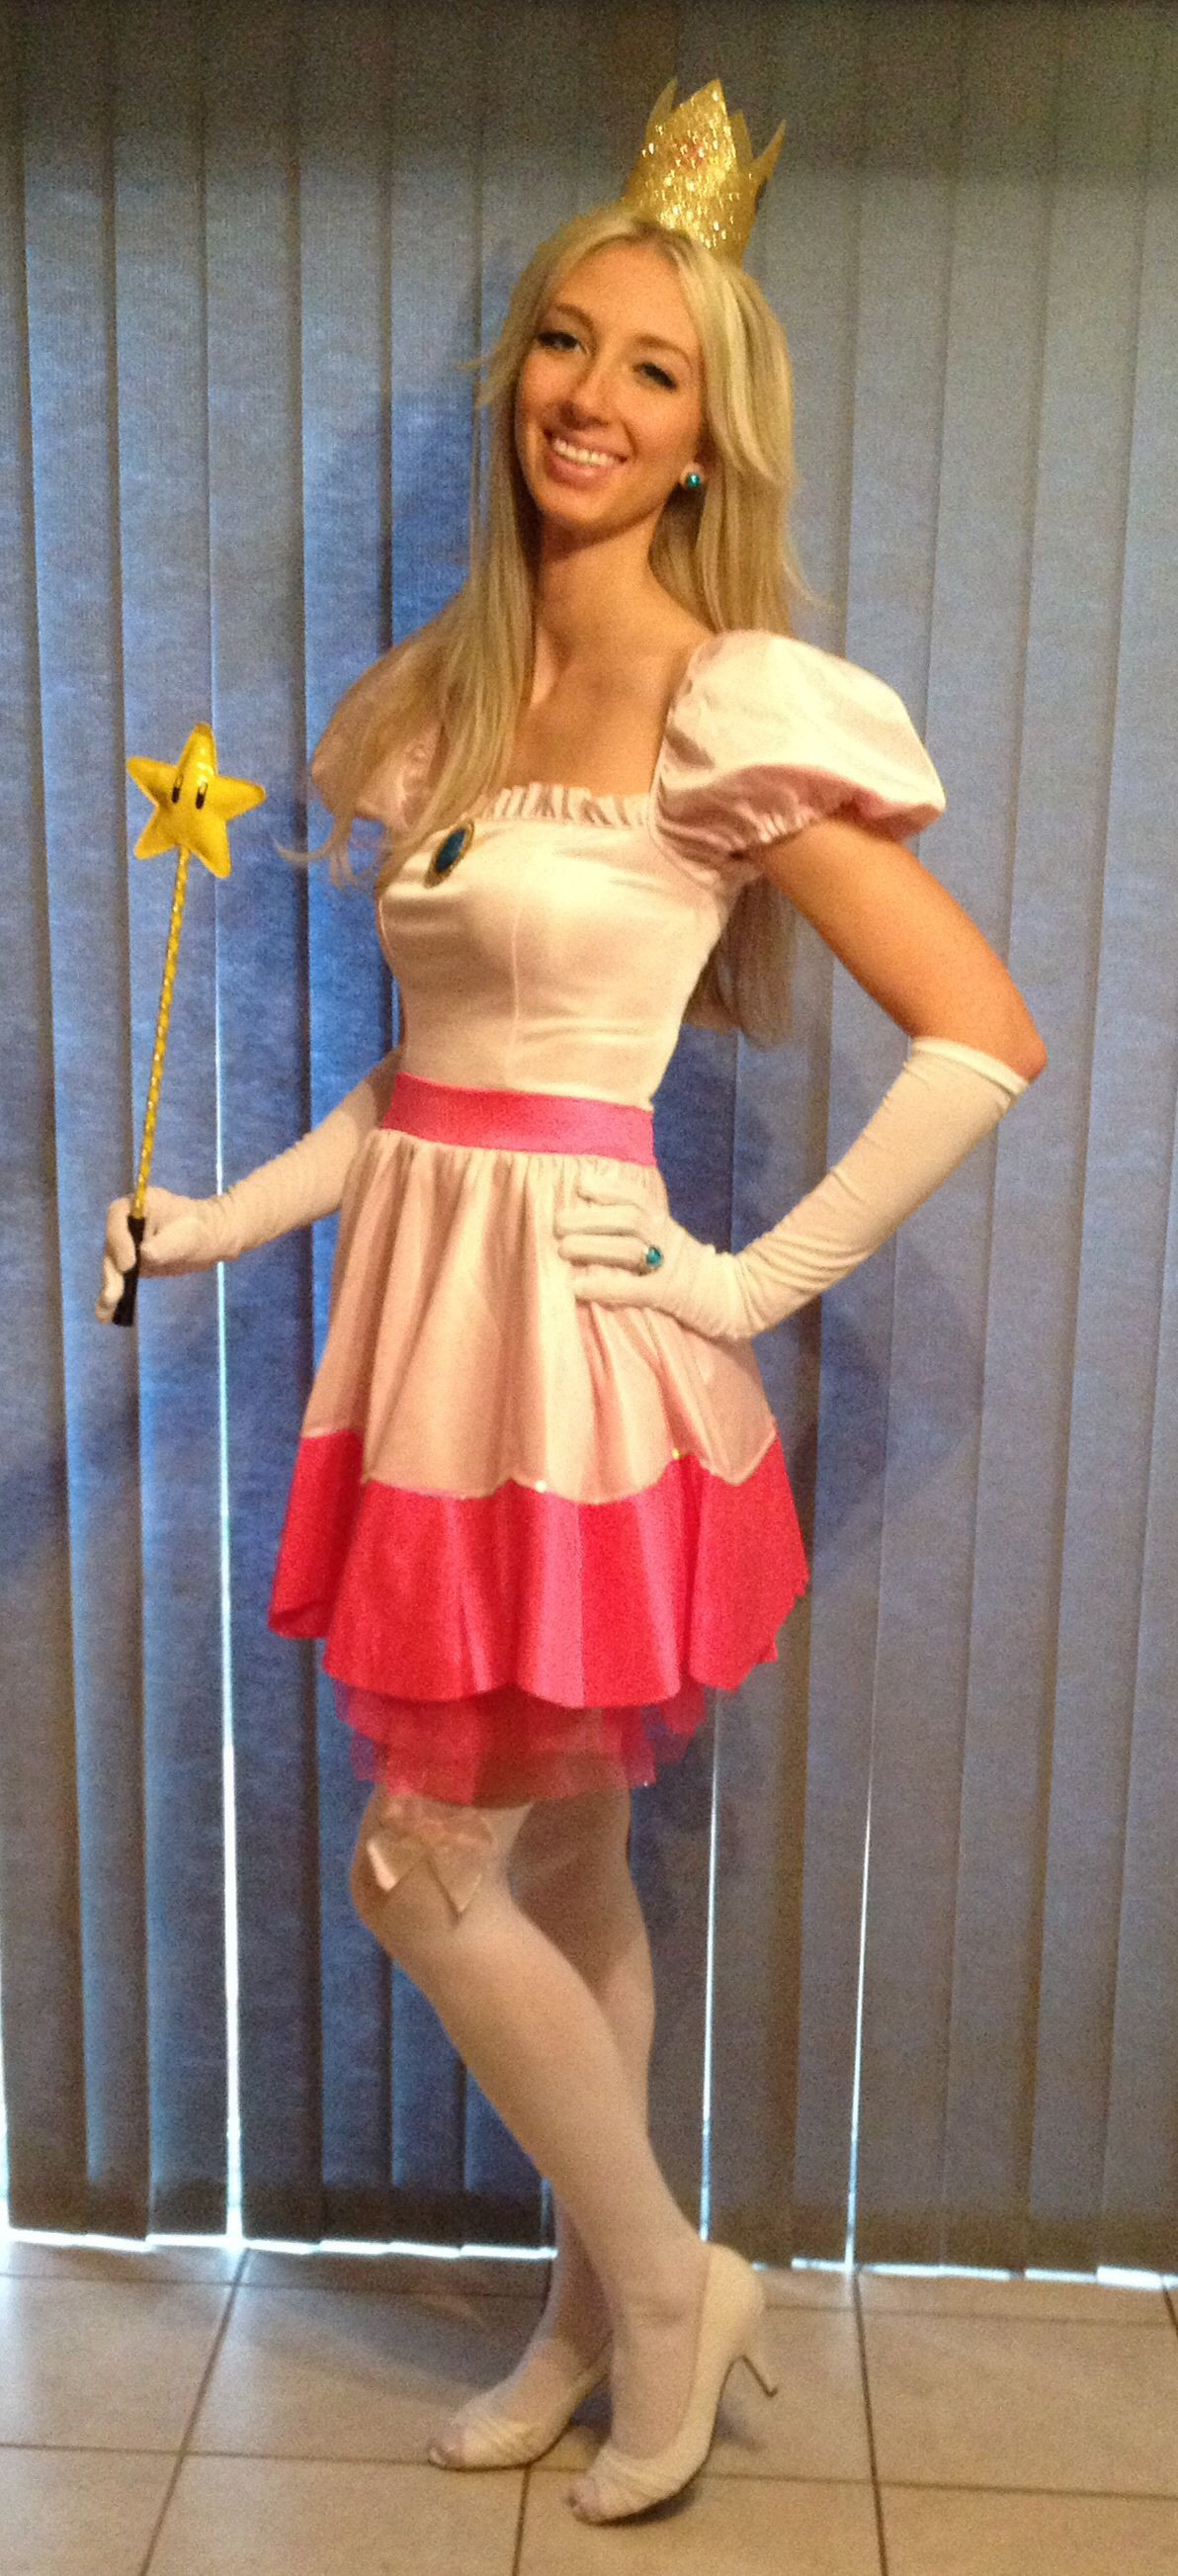 Best ideas about DIY Princess Peach Costumes
. Save or Pin my Princess Peach costume Now.